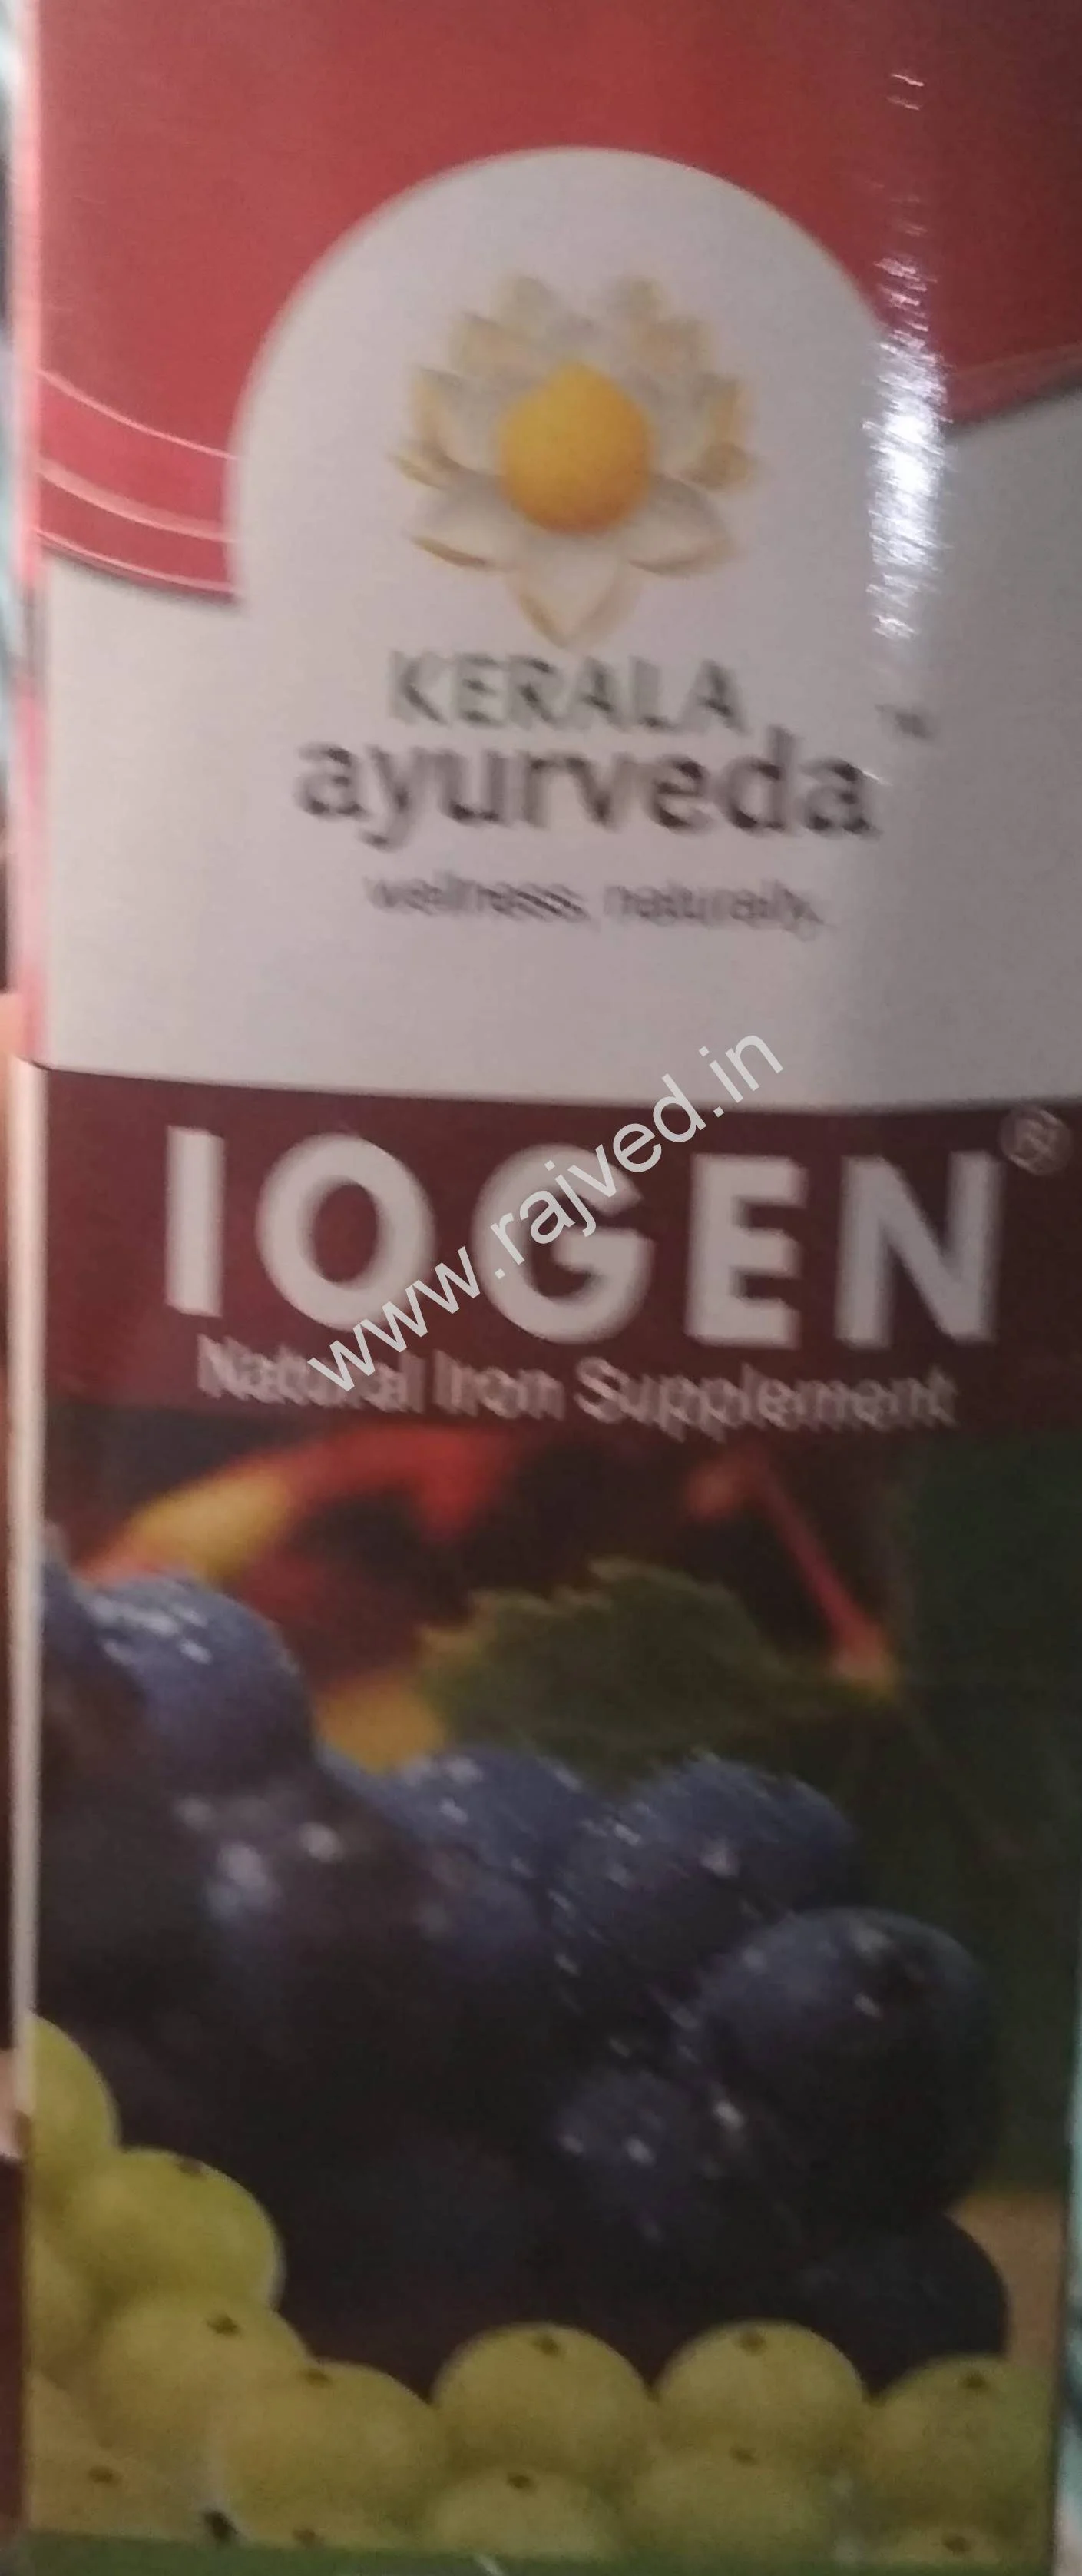 logen syrup 200ml Kerala Ayurveda Ltd